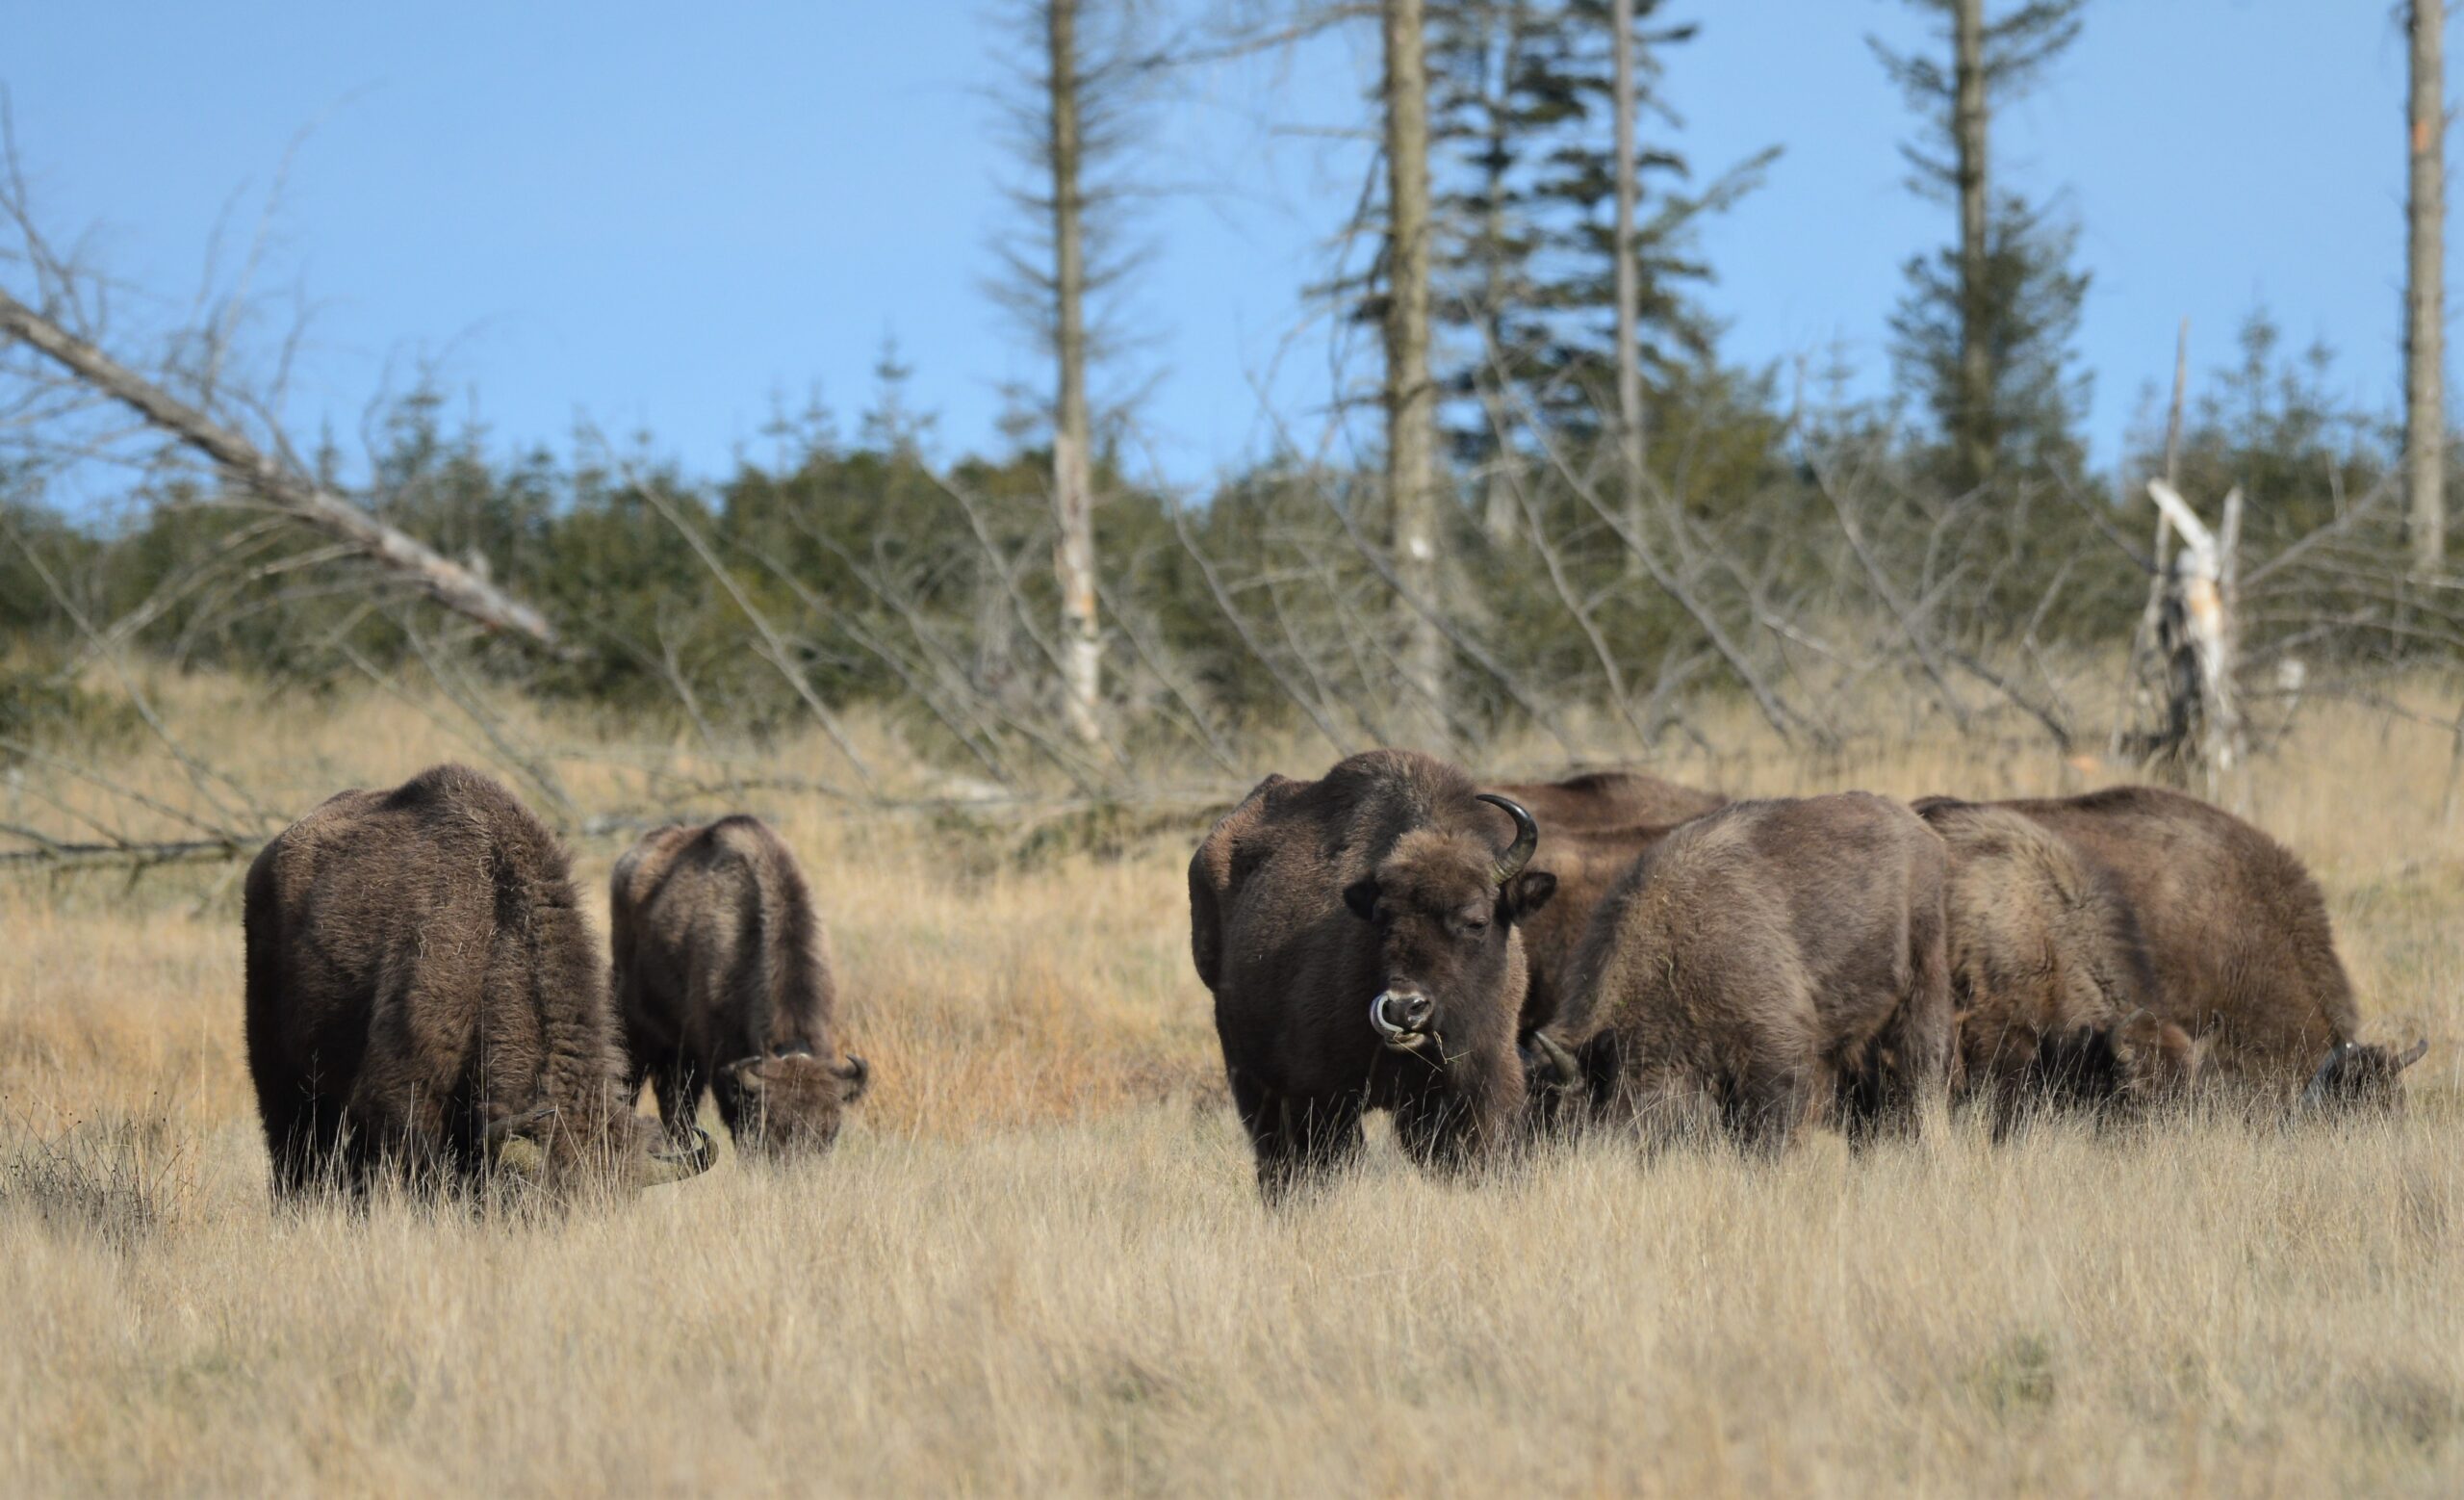 Lejlighedsvis ø tyve Arrival of Dutch bison boosts natural grazing at Danish rewilding  initiative | Rewilding Europe